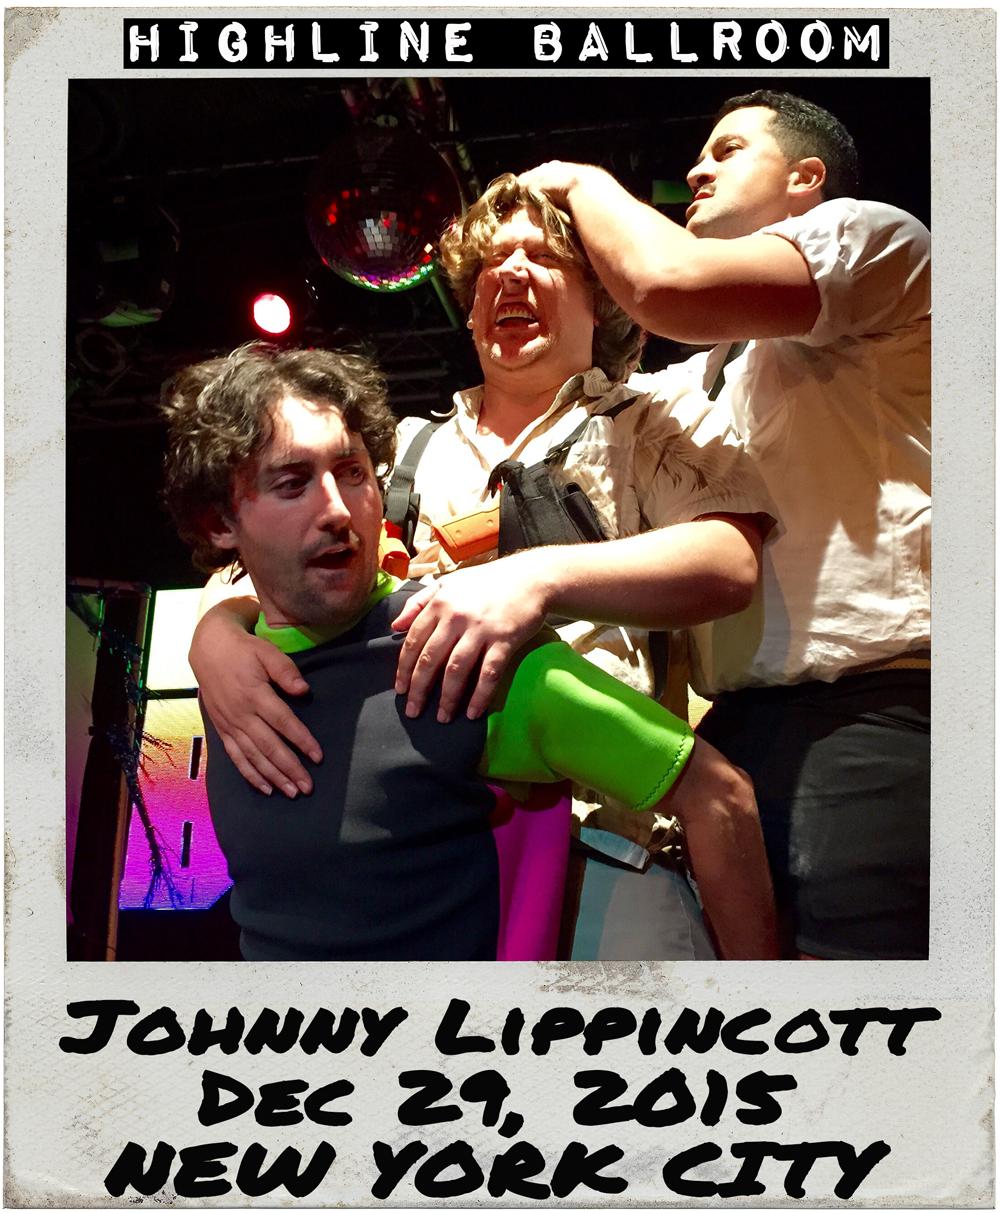 12_29_15_Johnny-Lippincott_NYC.png